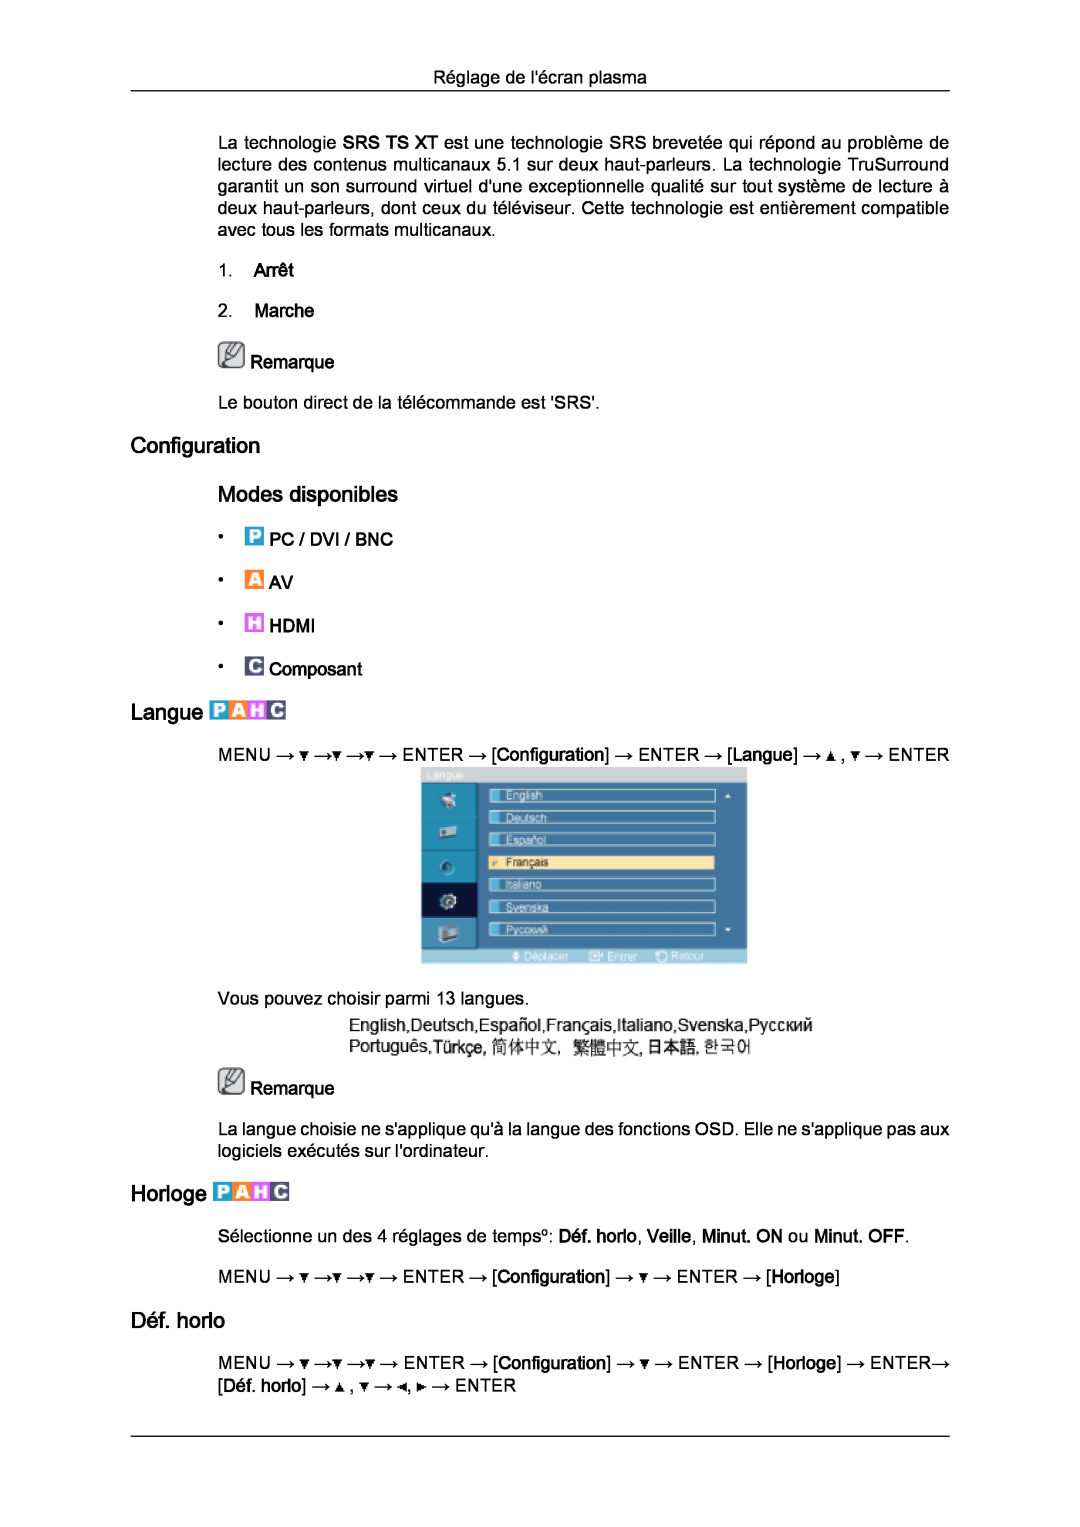 Samsung PH50KPPLBF/EN manual Configuration Modes disponibles, Langue, Horloge, Déf. horlo, Arrêt 2. Marche Remarque 